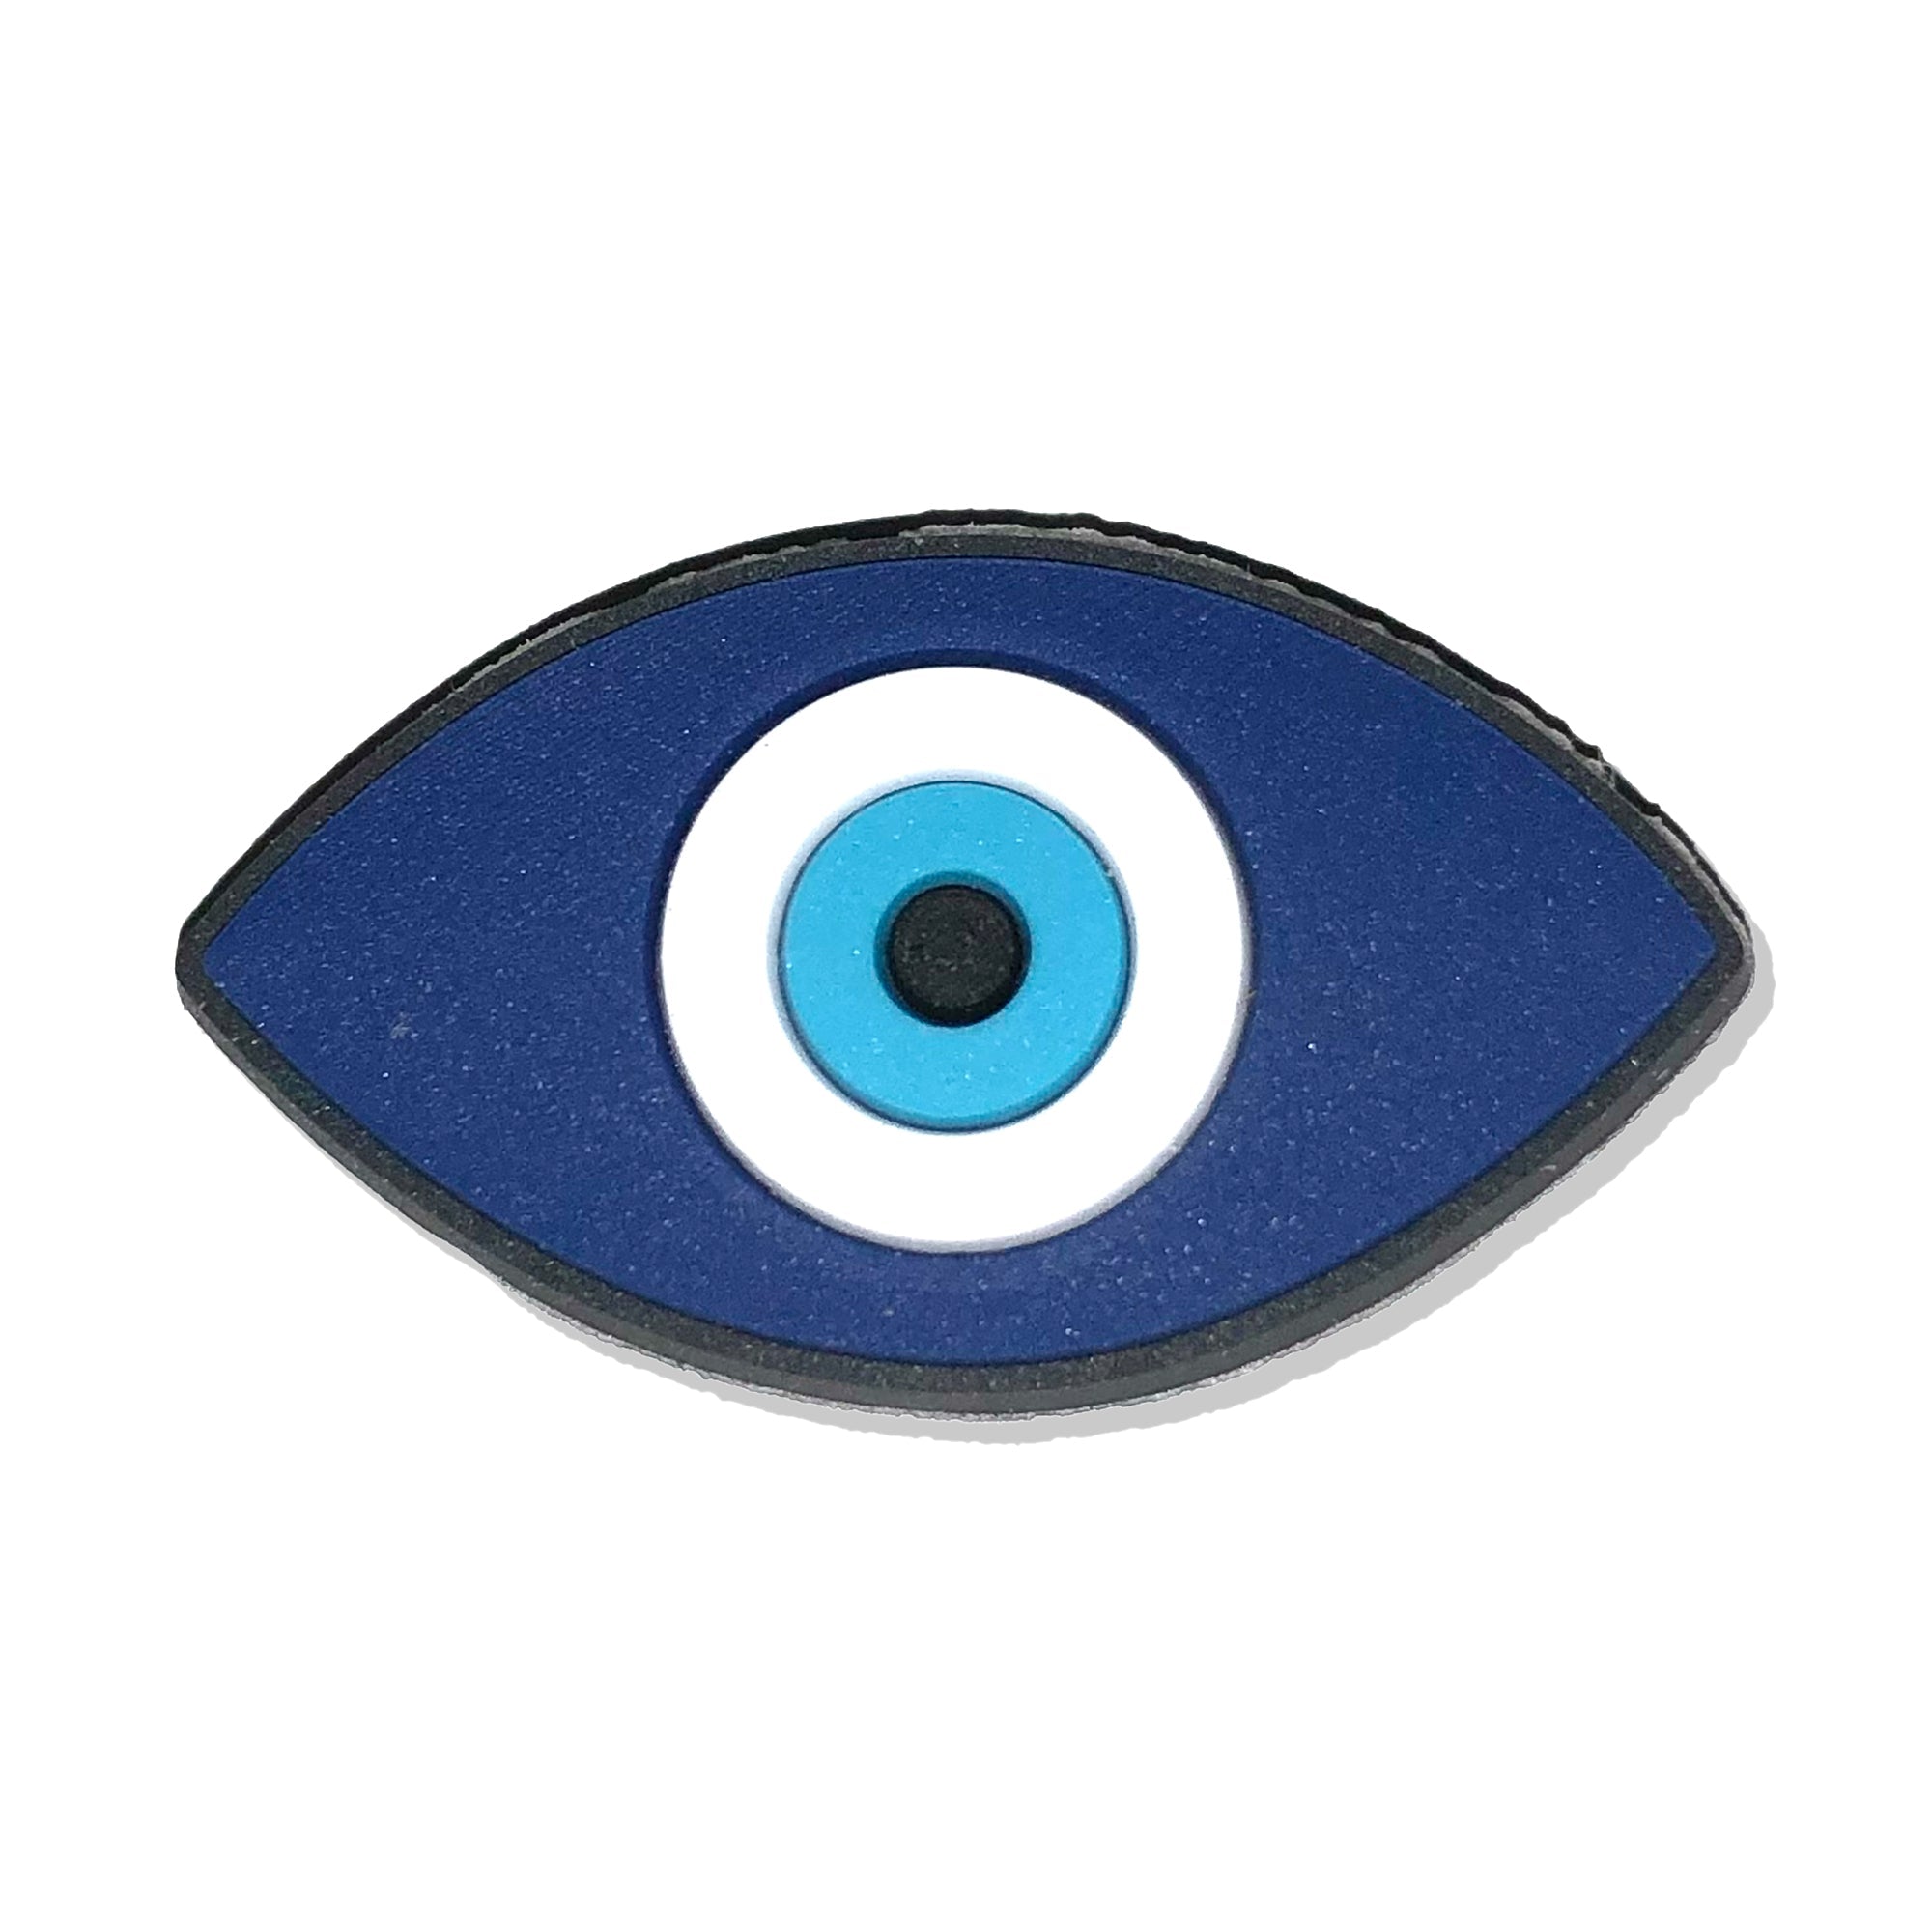 Evil Eye Shoe Charm: Ward Off Negative Vibes 👁️ - Questsole